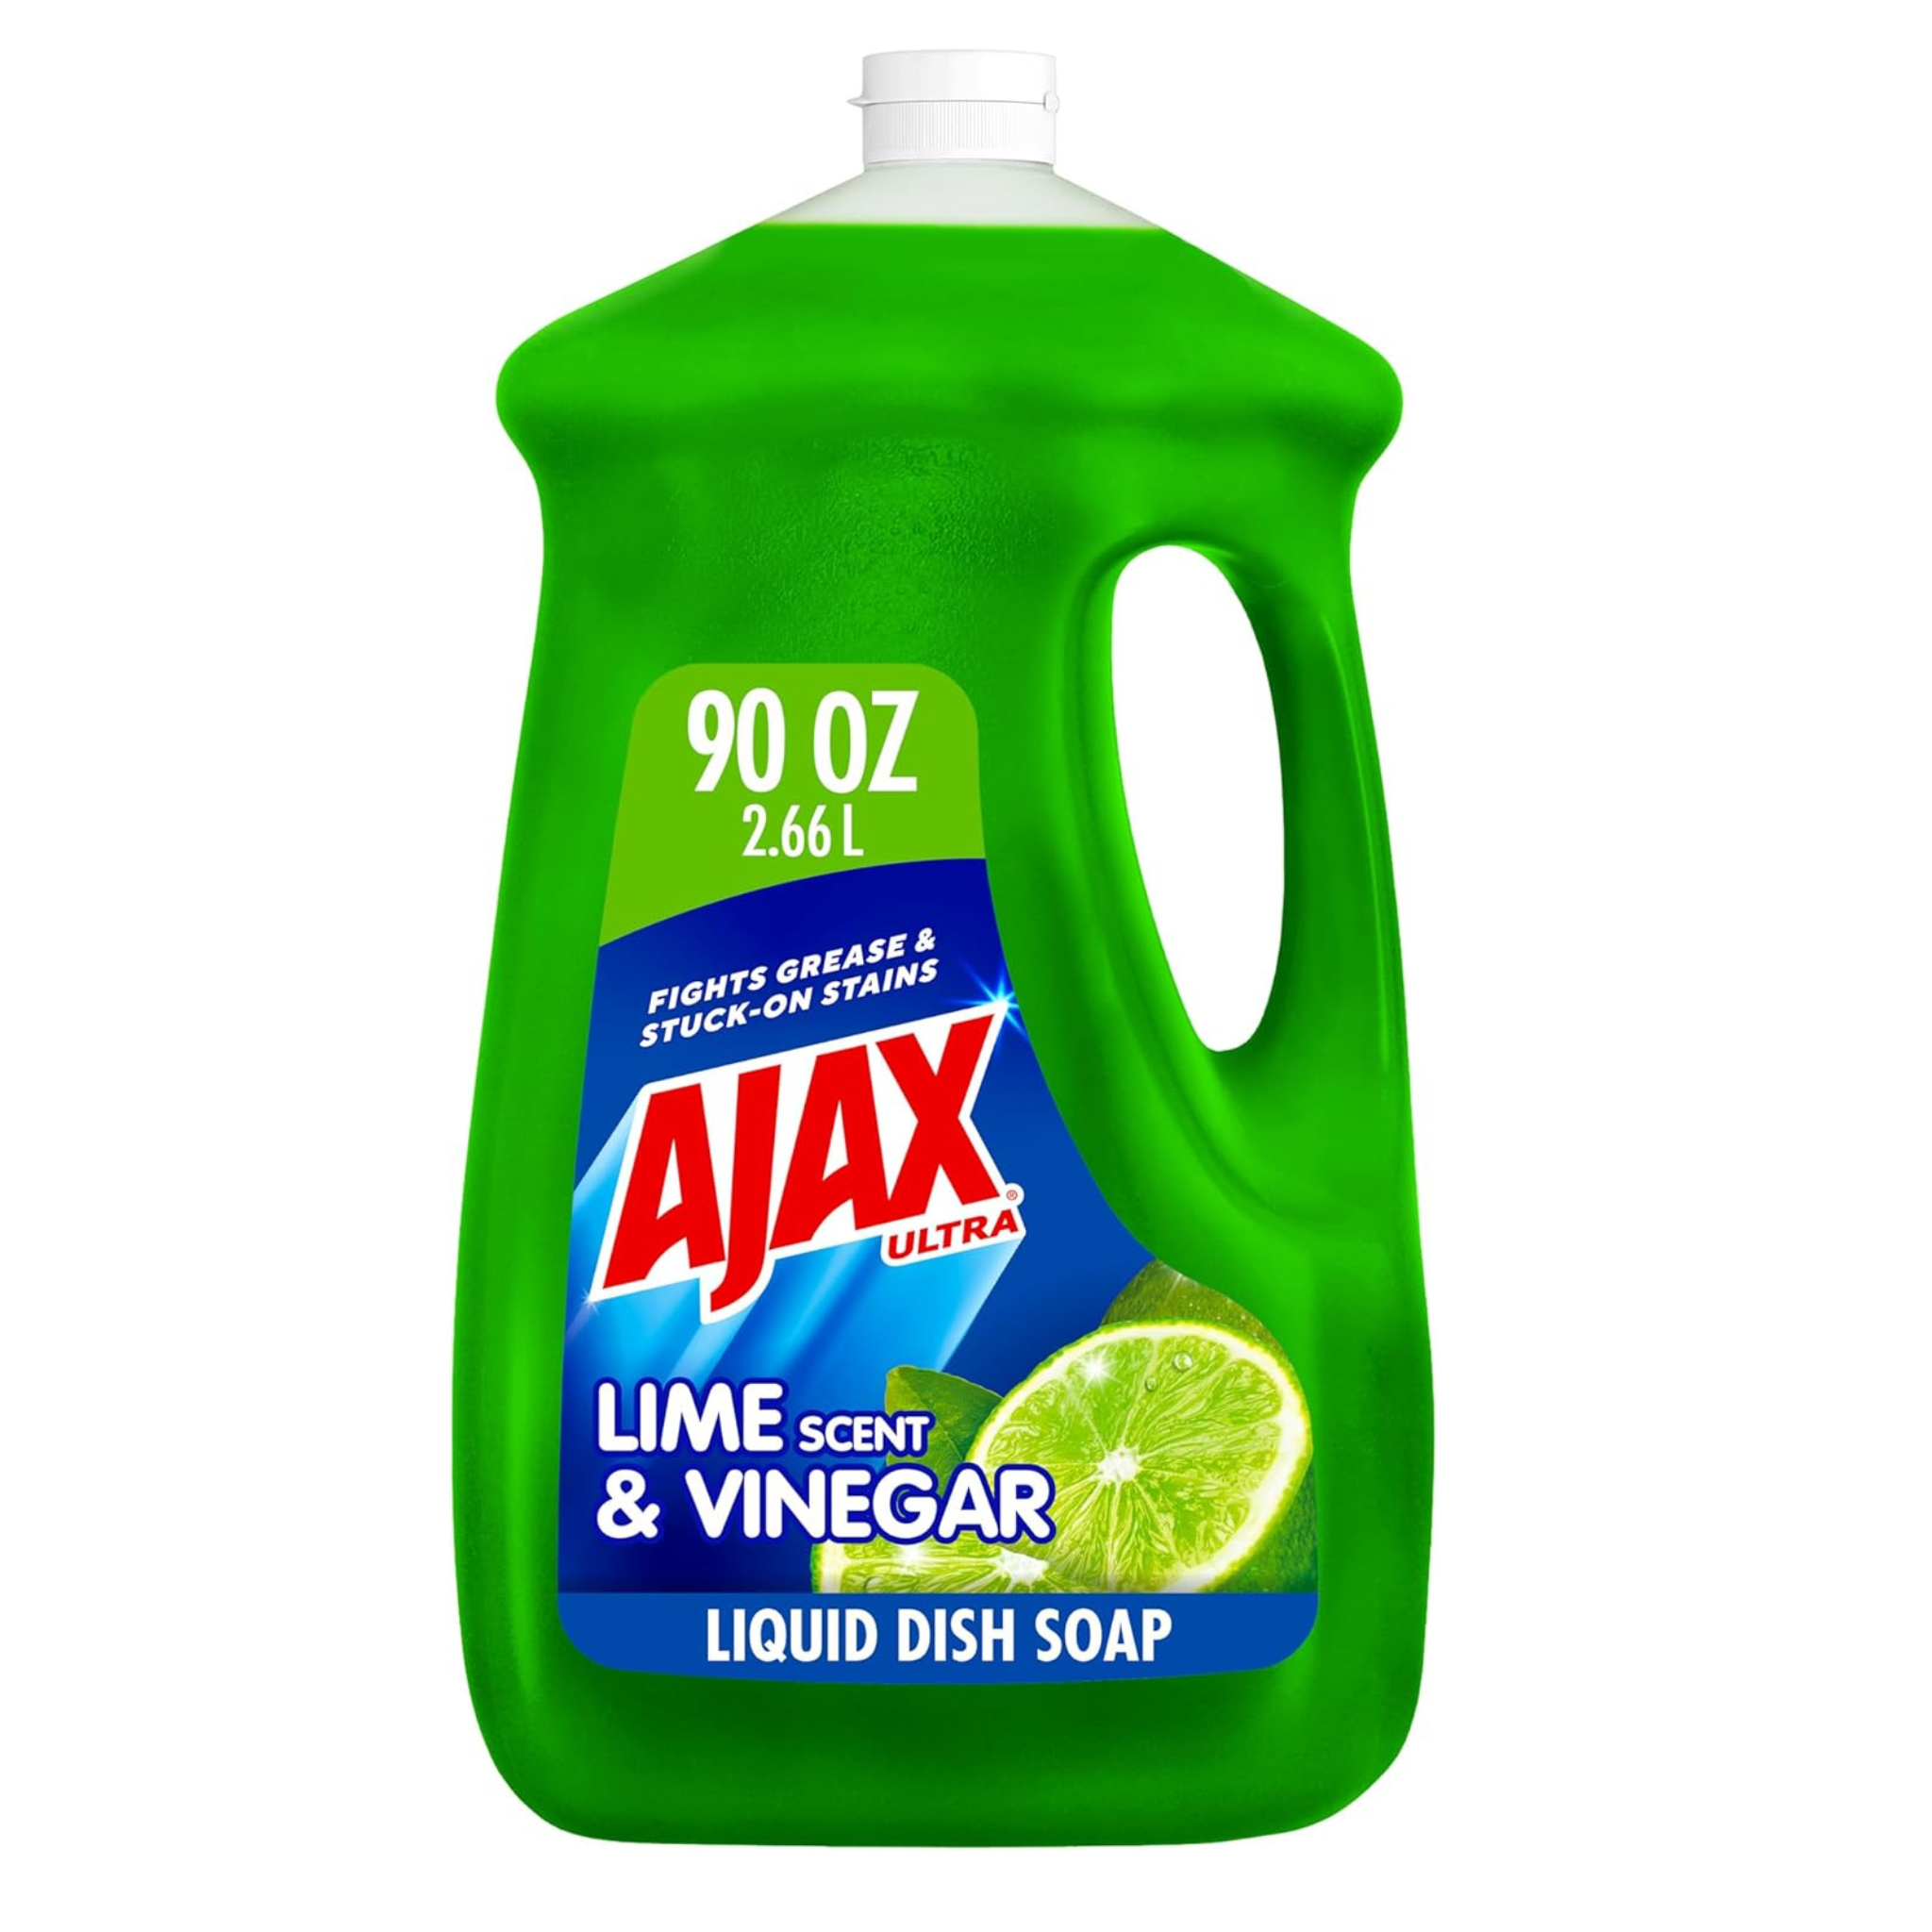 90-Oz Ajax Ultra Liquid Dish Soap (Vinegar and Lime Scent)